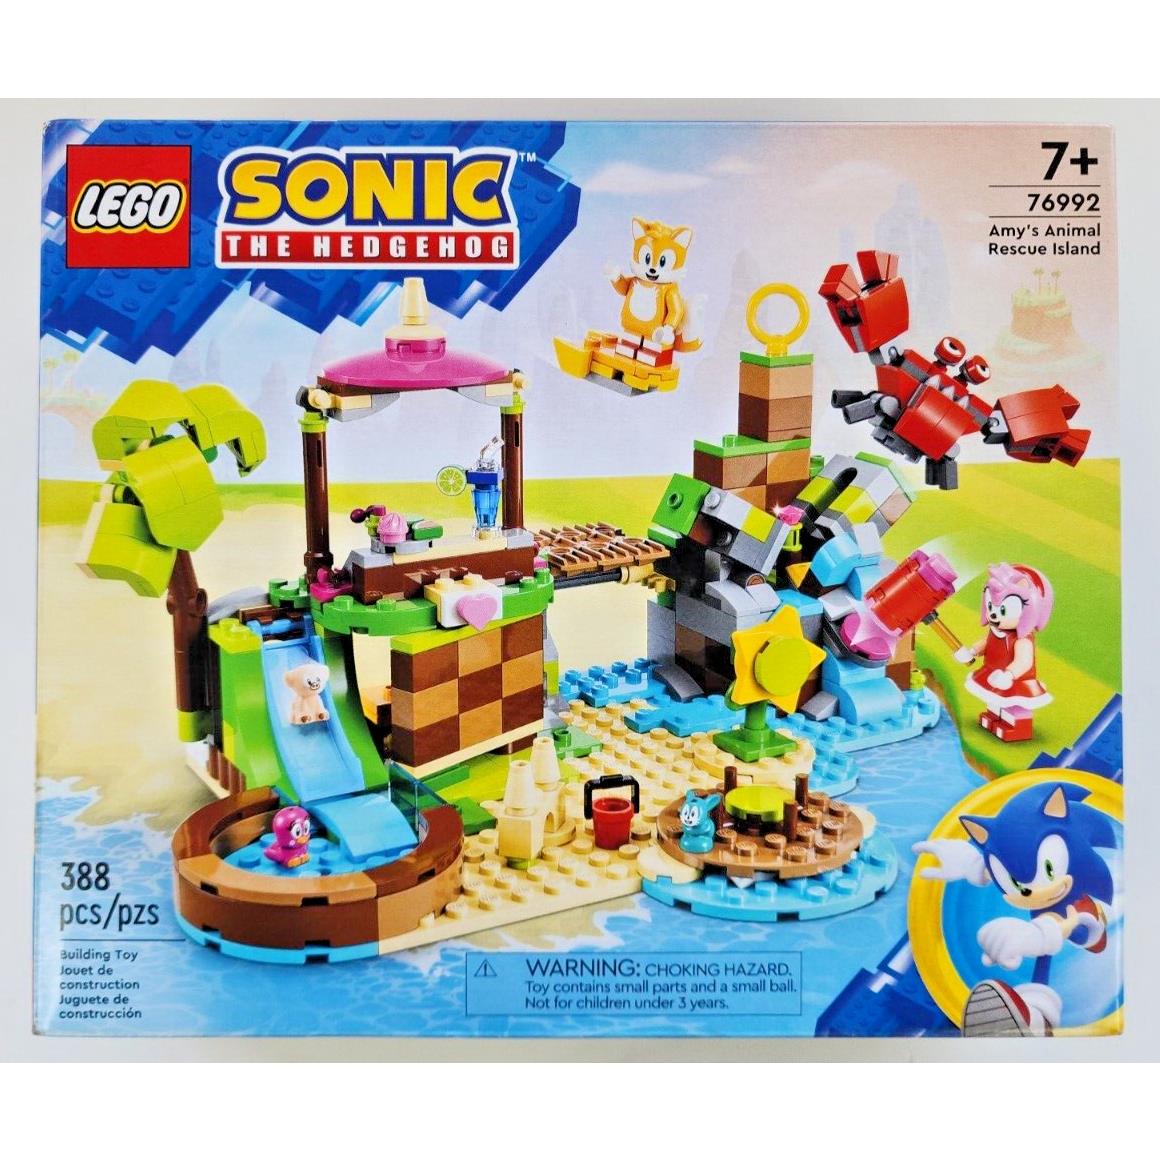 Lego Sonic The Hedgehog Amy s Animal Rescue Island 76992